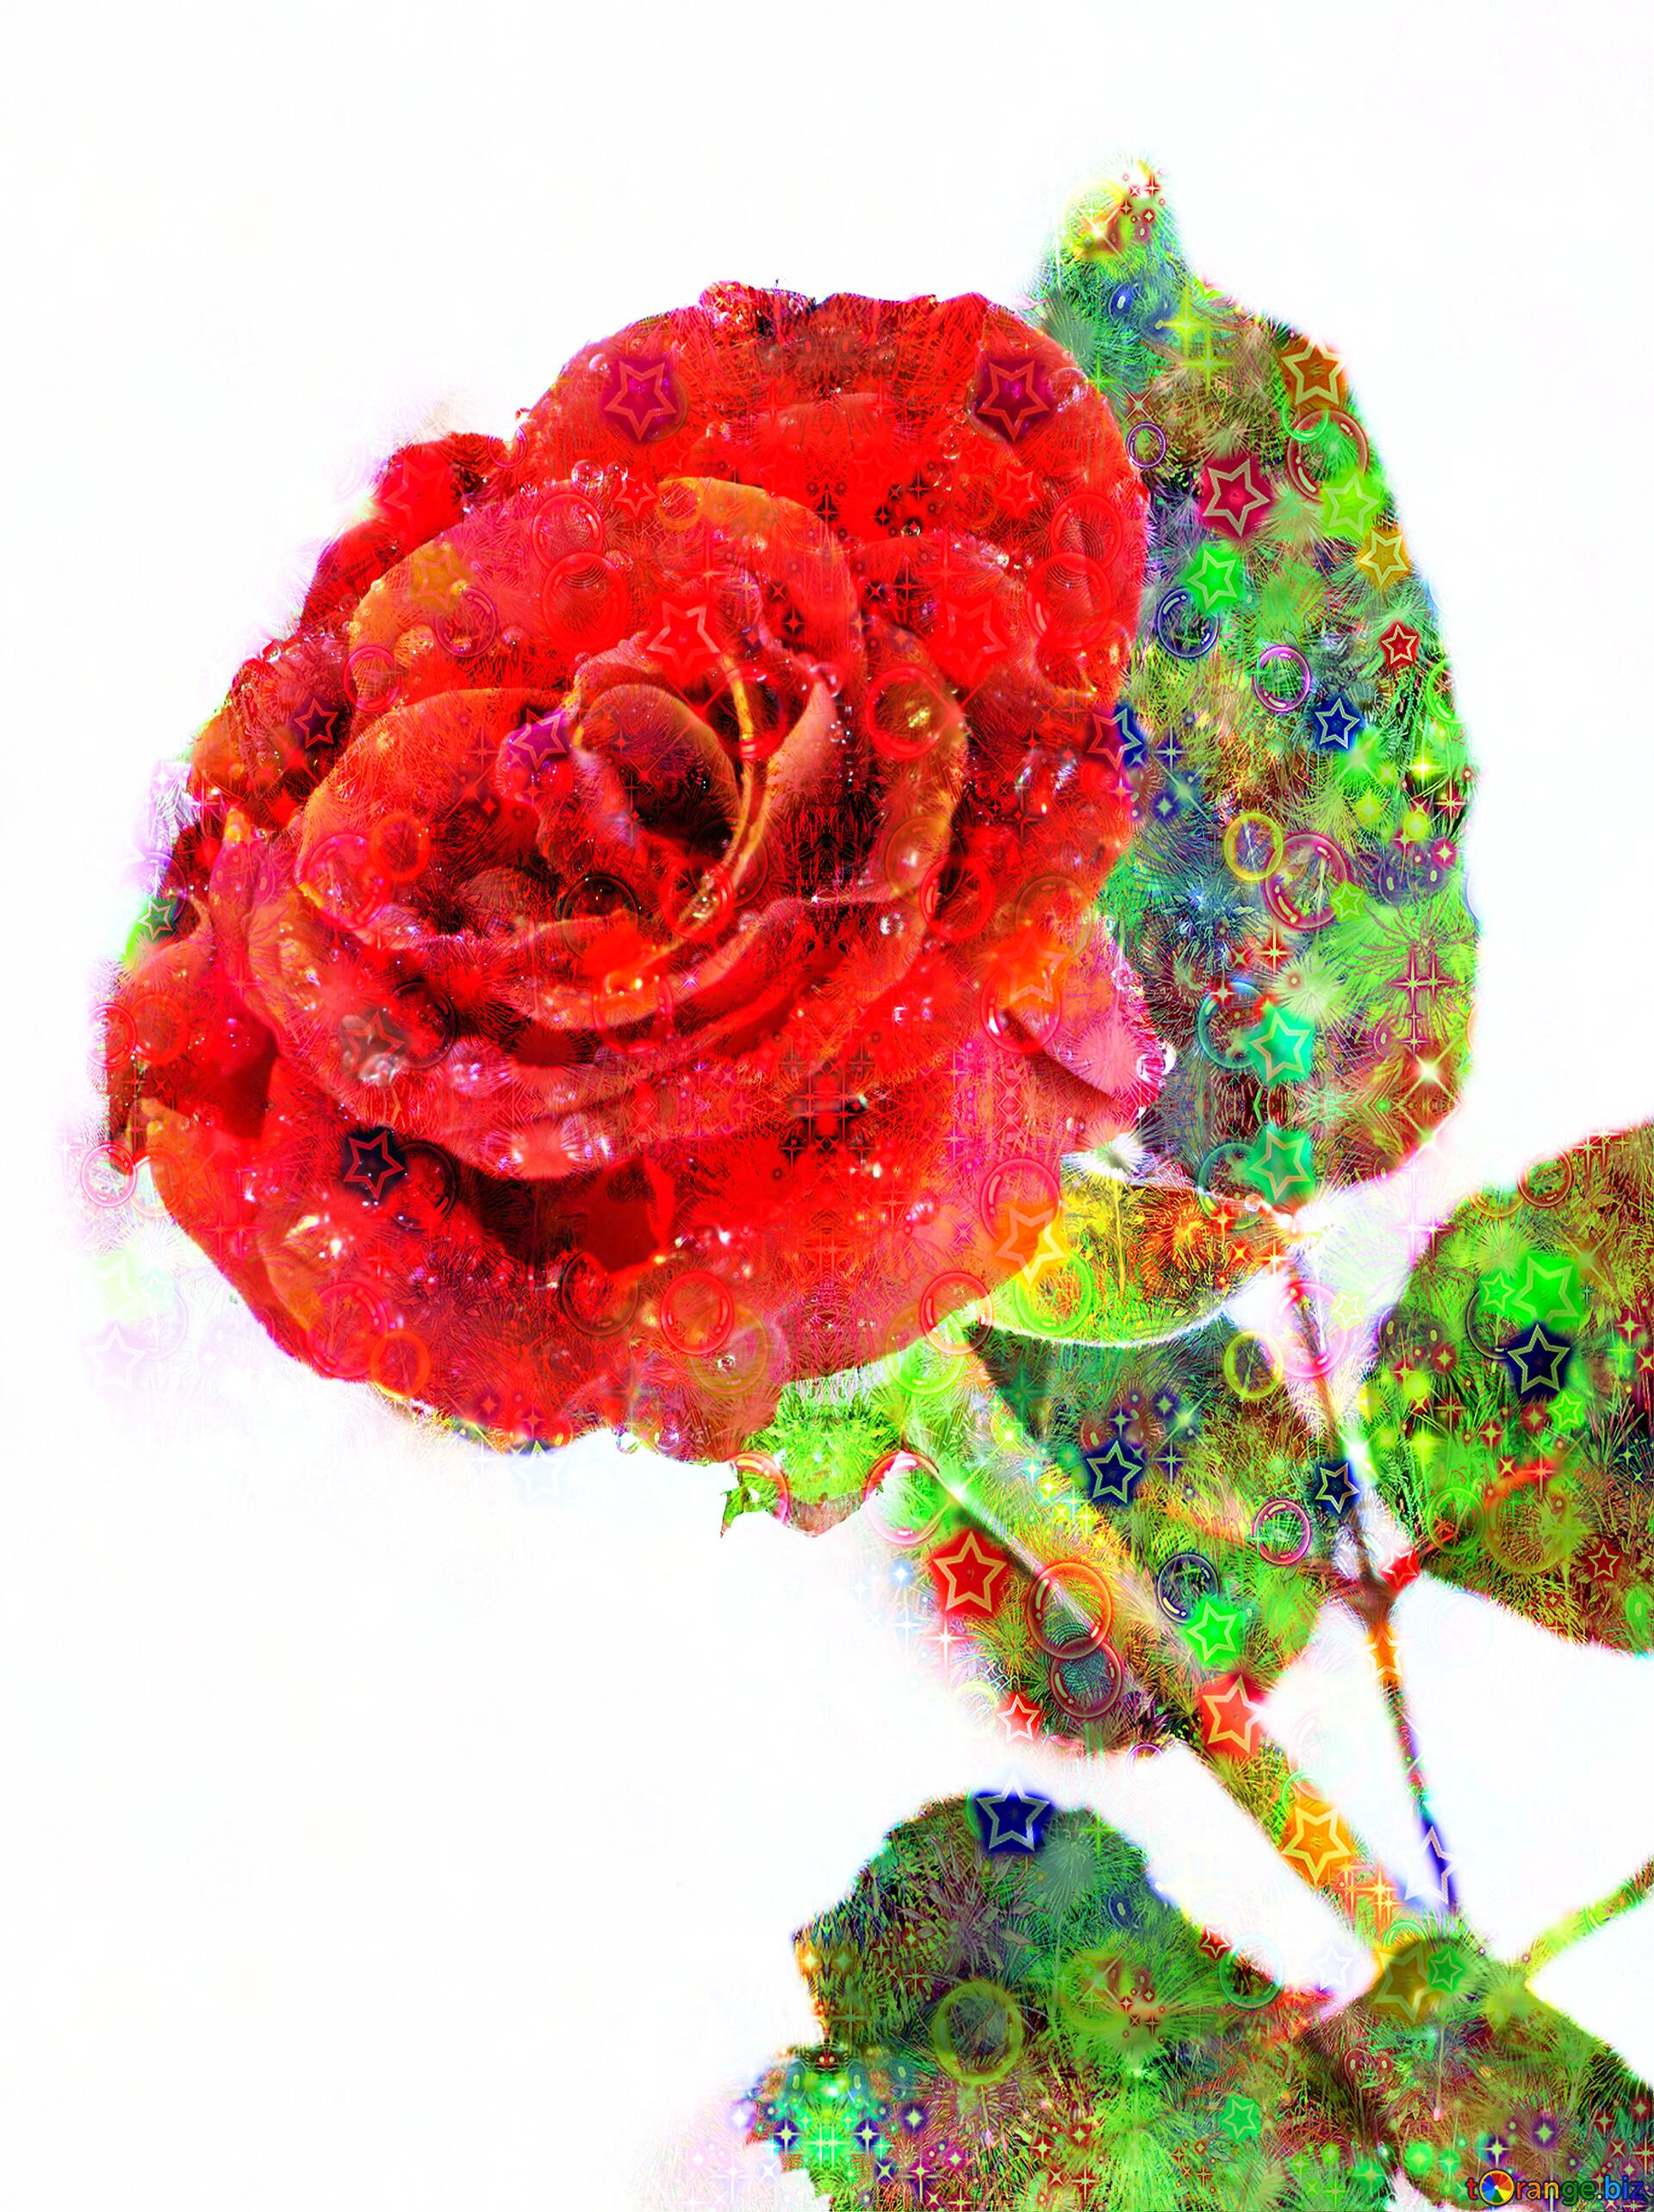 Download Free Picture Celebratory Rose Flower Background On Cc By License Free Image Stock Torange Biz Fx 154193